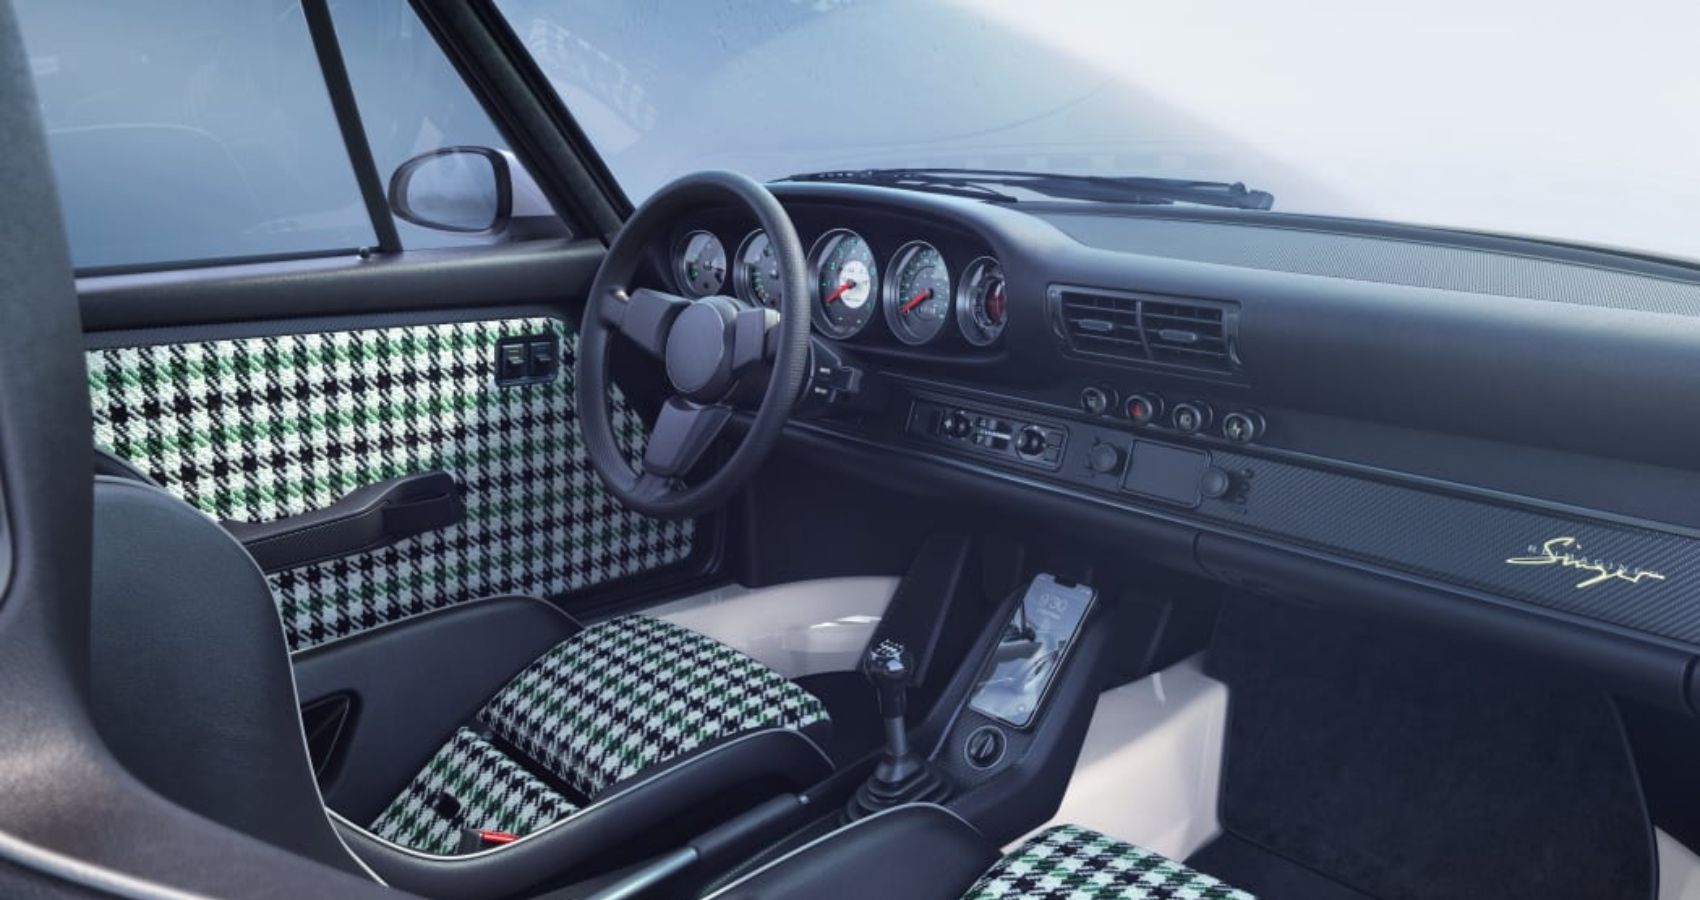 Singer 911 Turbo Study White Houndstooth Interior